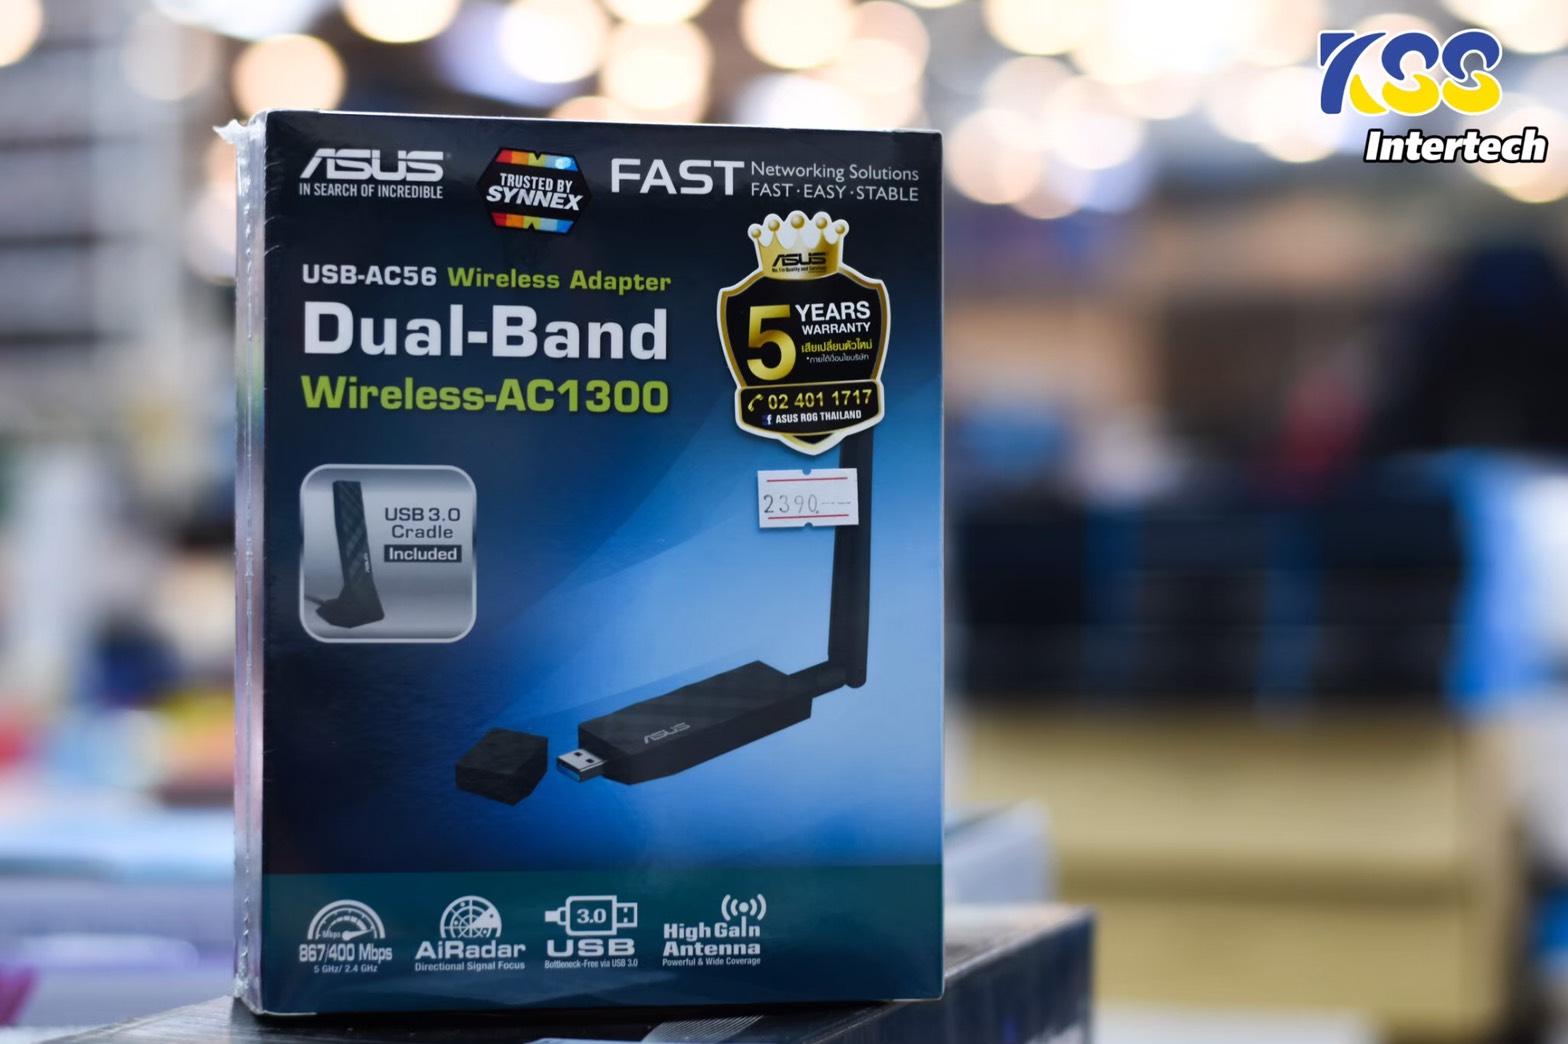 Asus Dual-Band Wireless-Ac1300 Usb 3.0 Wi-Fi Adapter Usb-Ac56. 